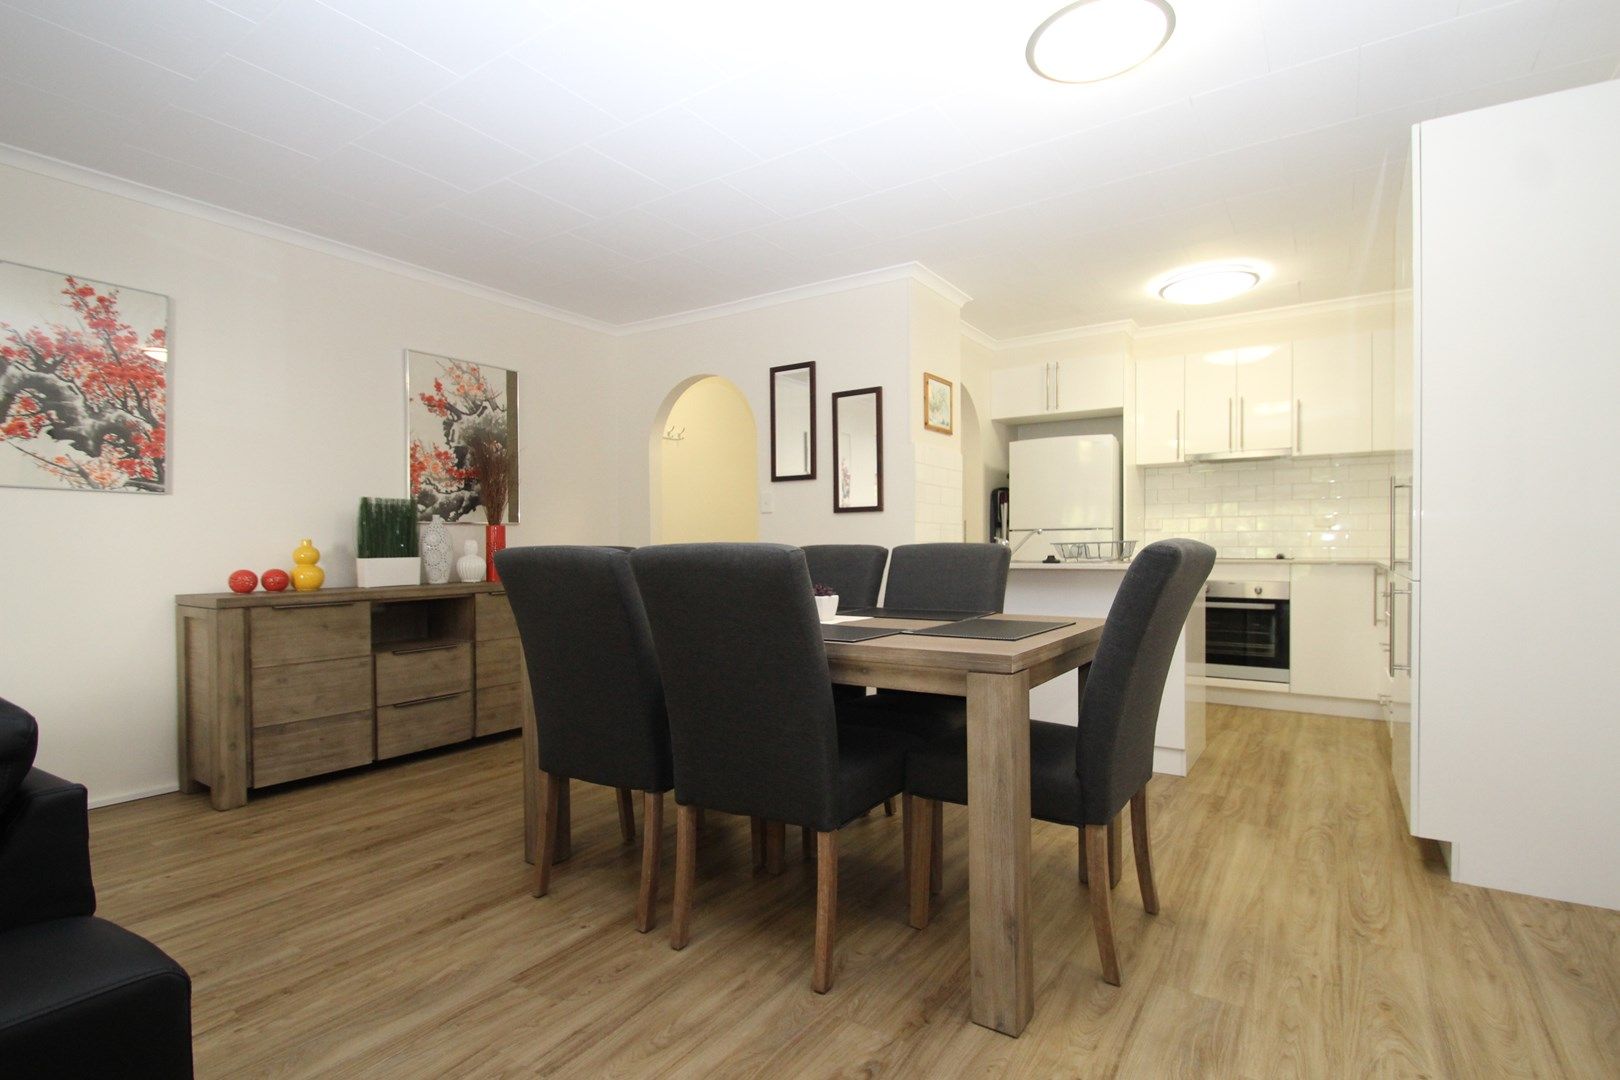 2 bedrooms Apartment / Unit / Flat in 24/29 George Street BRISBANE CITY QLD, 4000